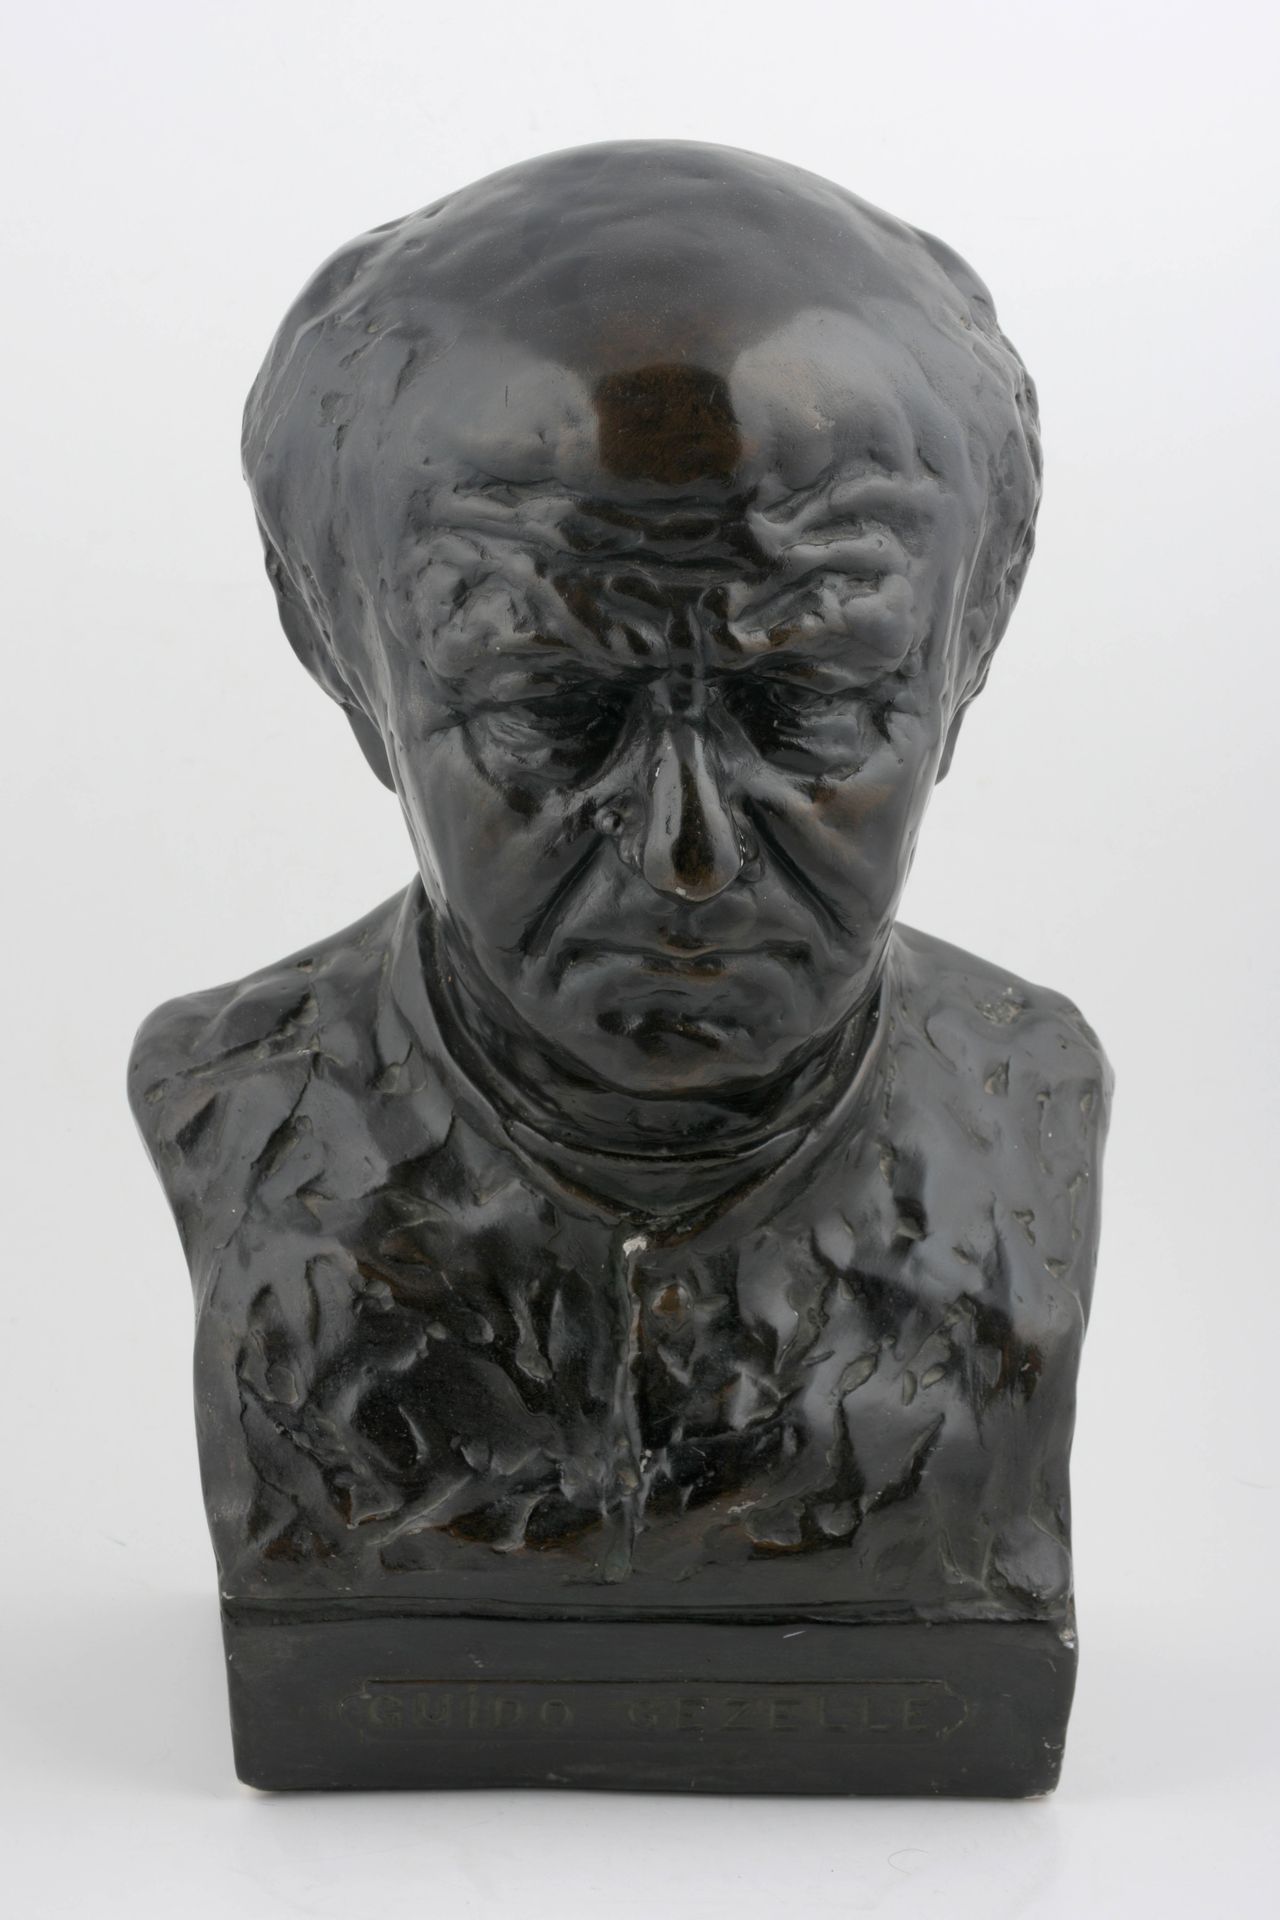 DE MAESTTE Bust of Guido Gezelle

(1921?) Plaasteren bust. Ca. 45 x 29 cm. Beper&hellip;